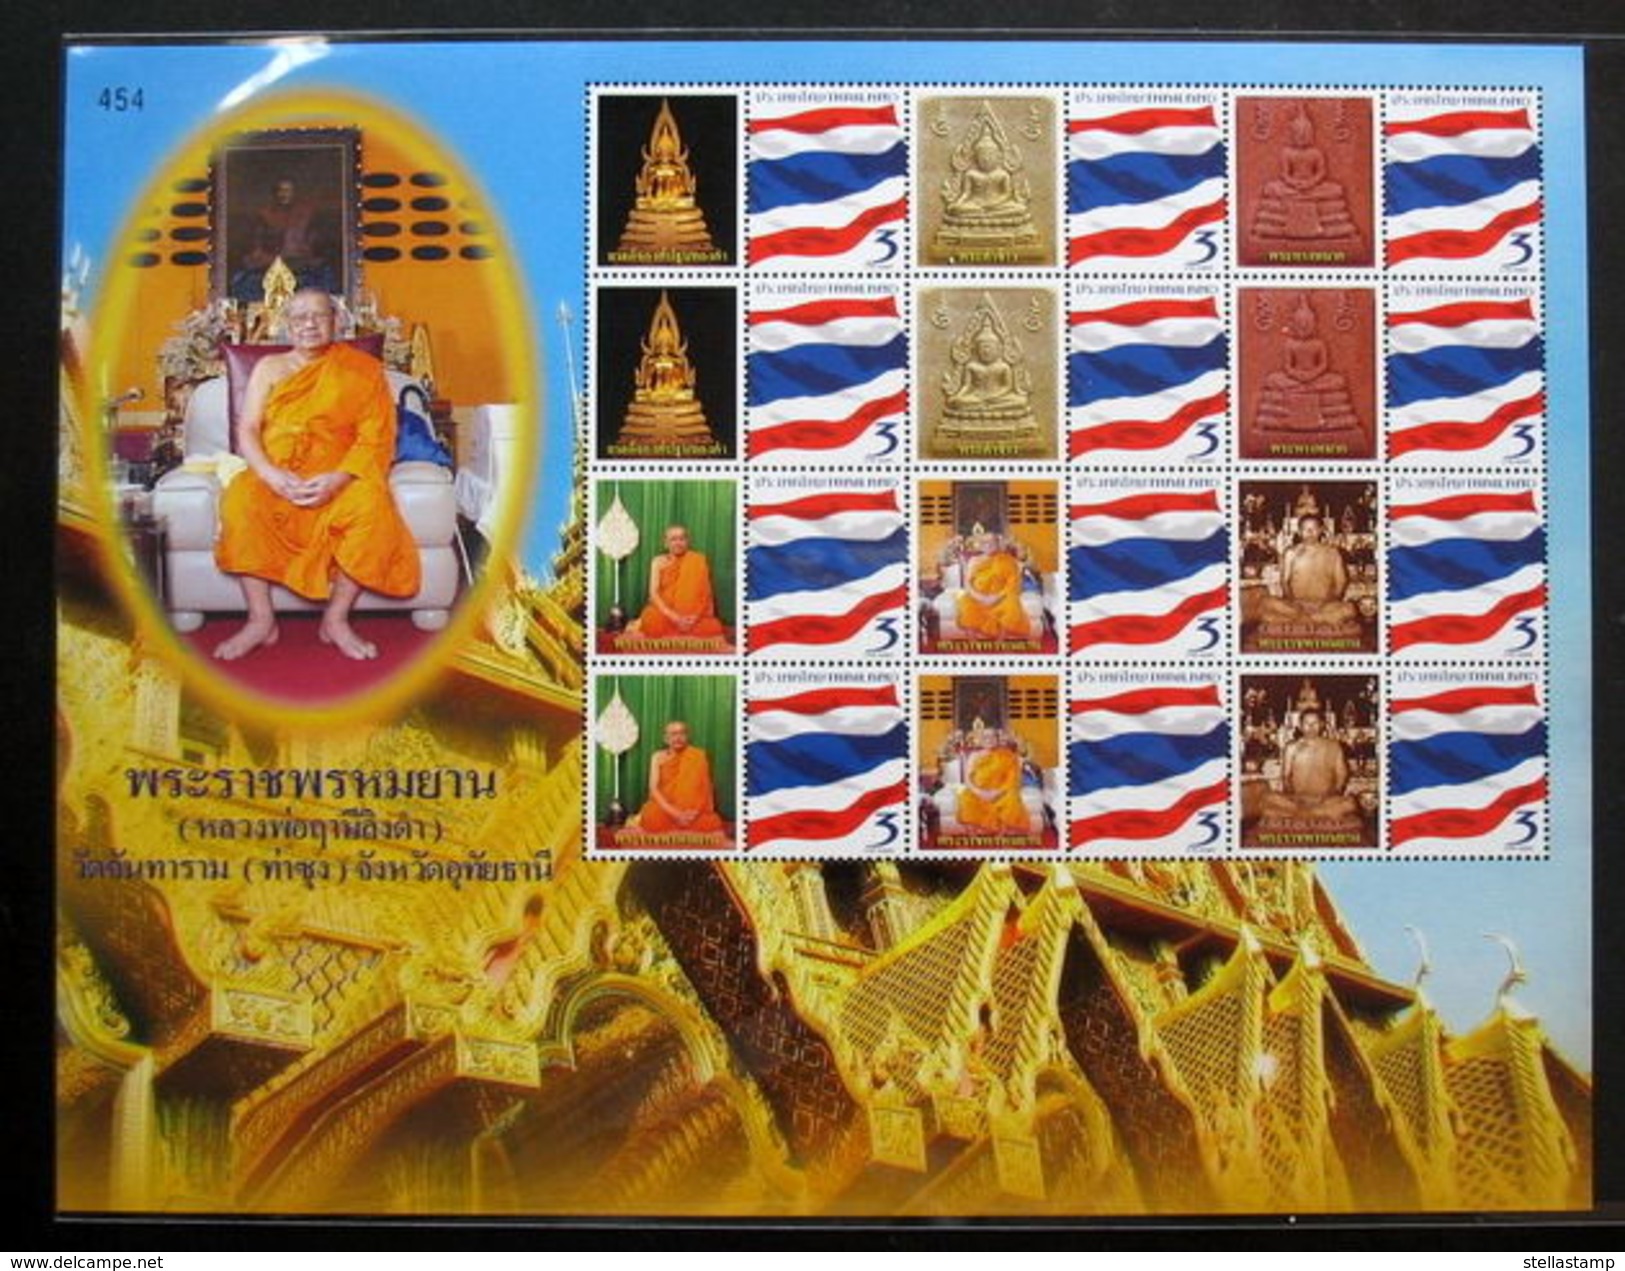 Thailand Stamp Personalized 2012 Wat Tha Sung - Uthaithani (2) - Thailand